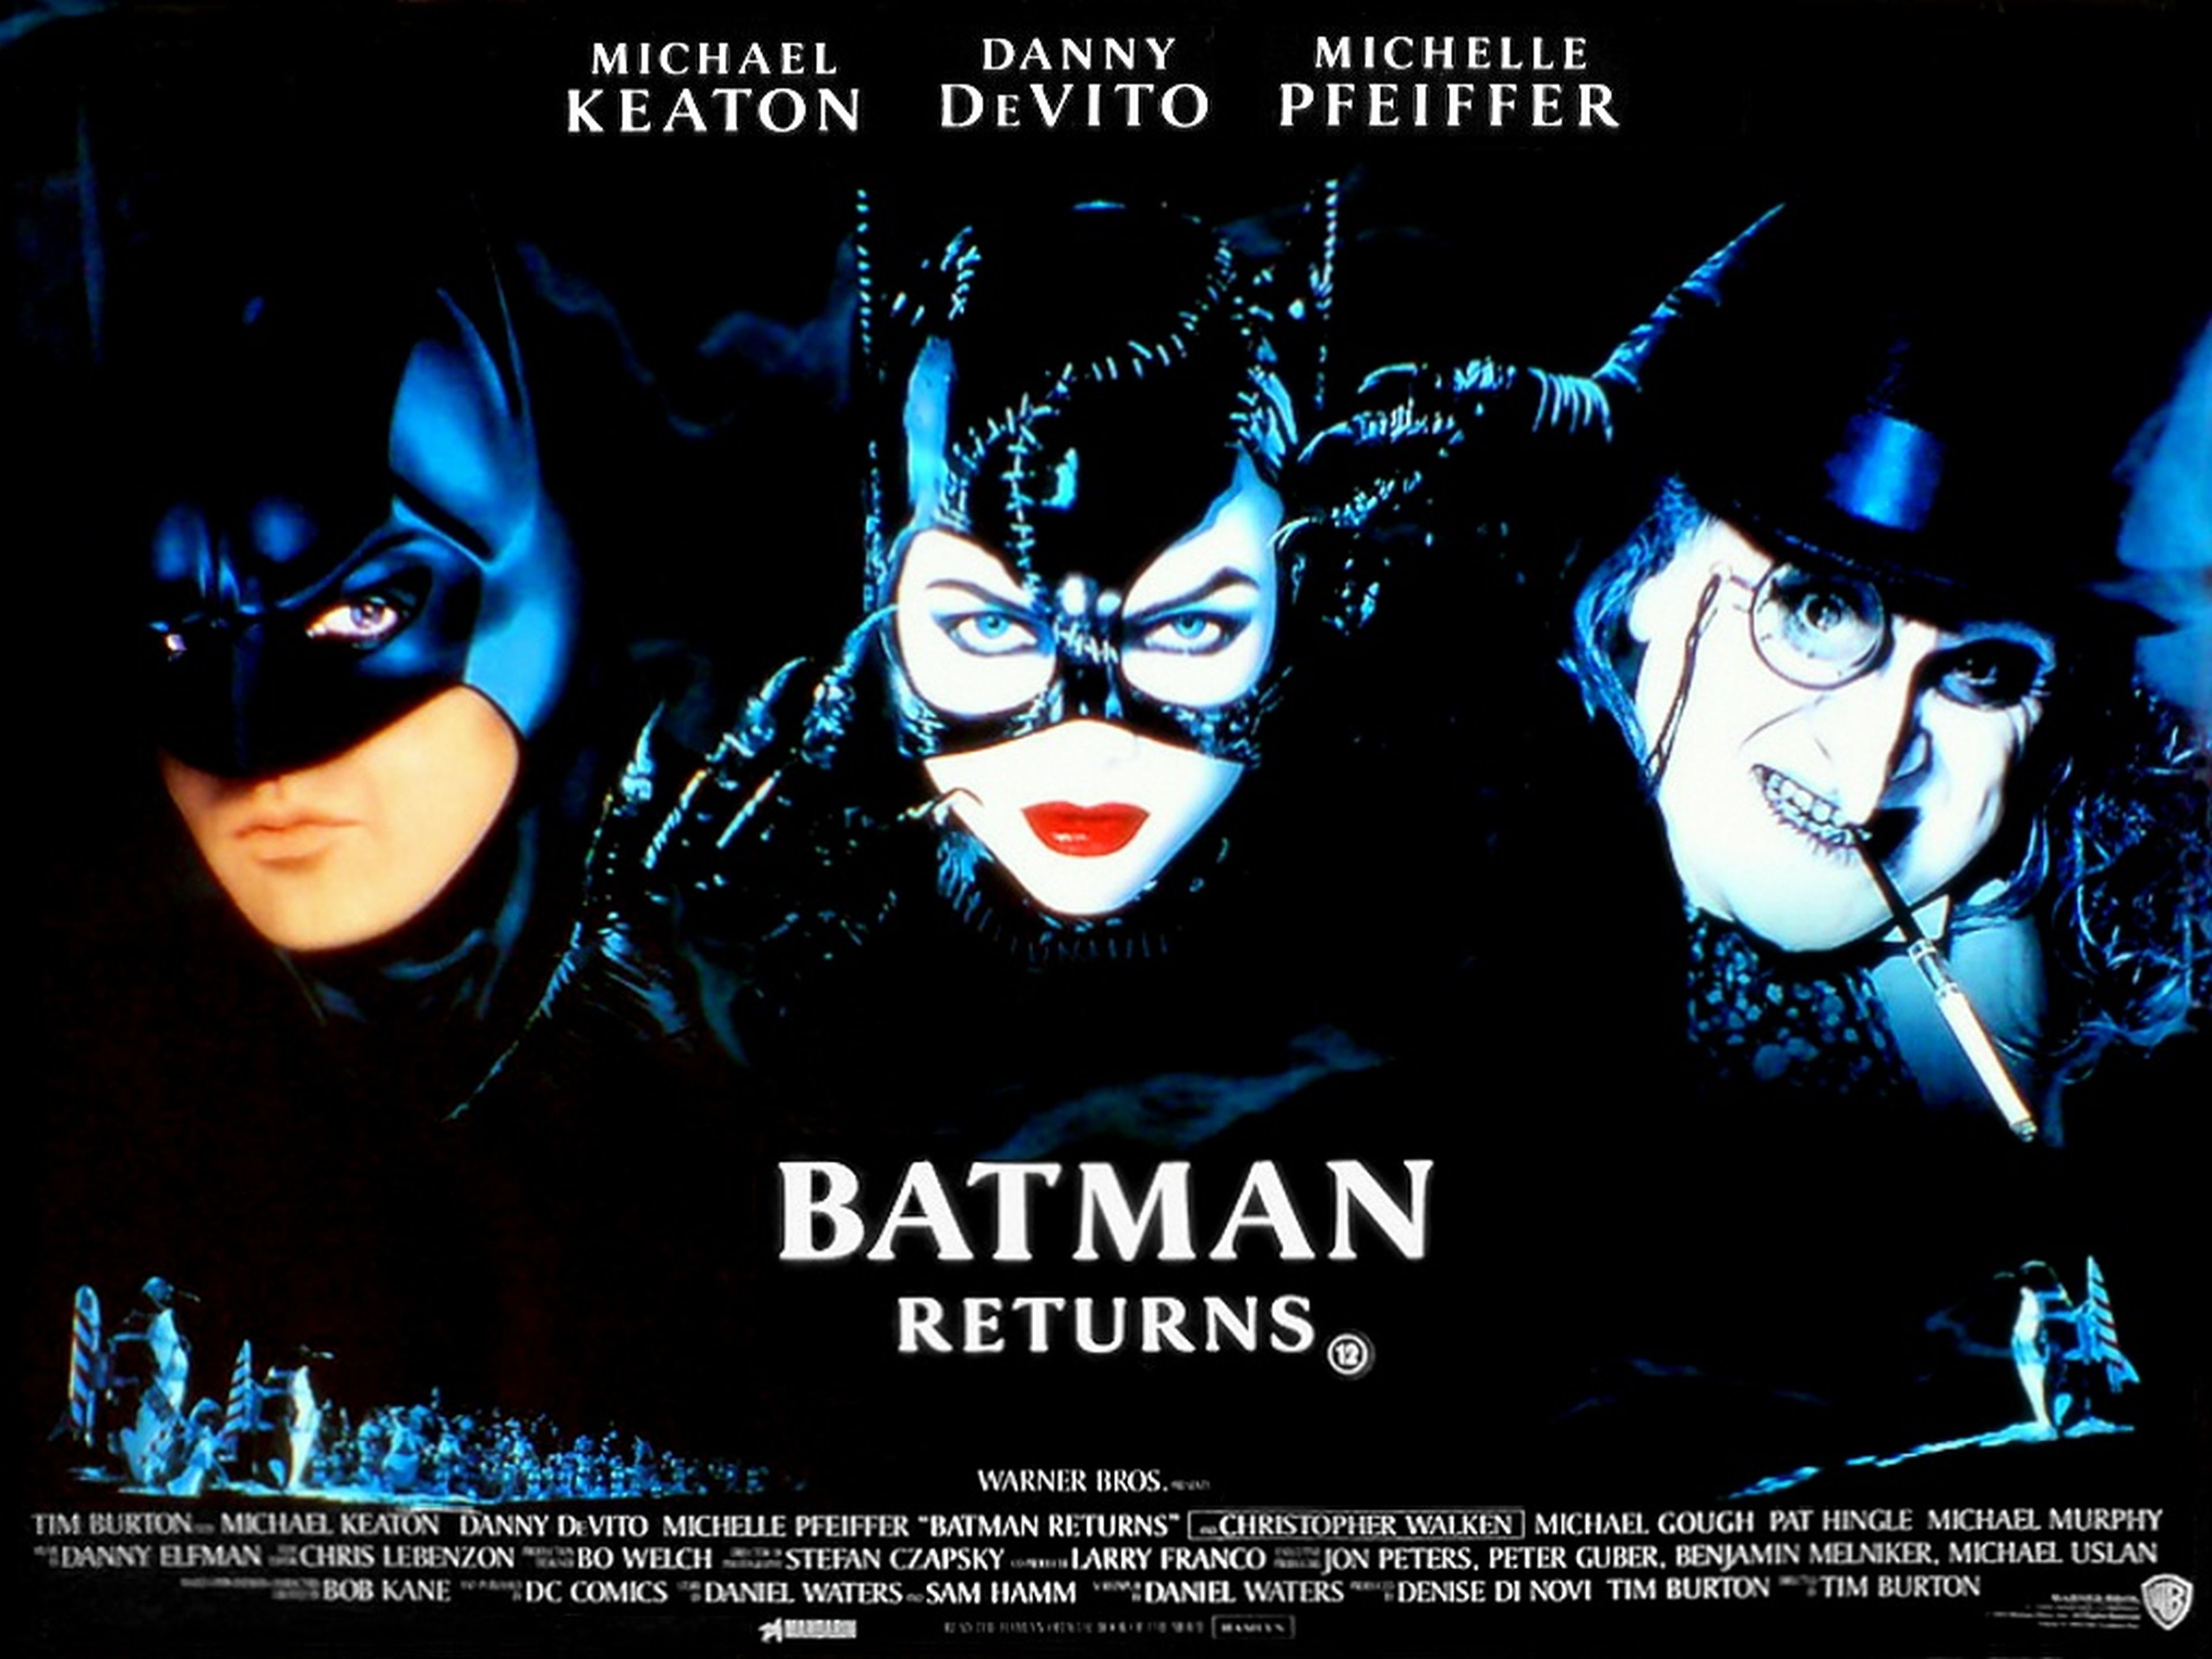 Cine de superhéroes: Crítica de Batman Vuelve